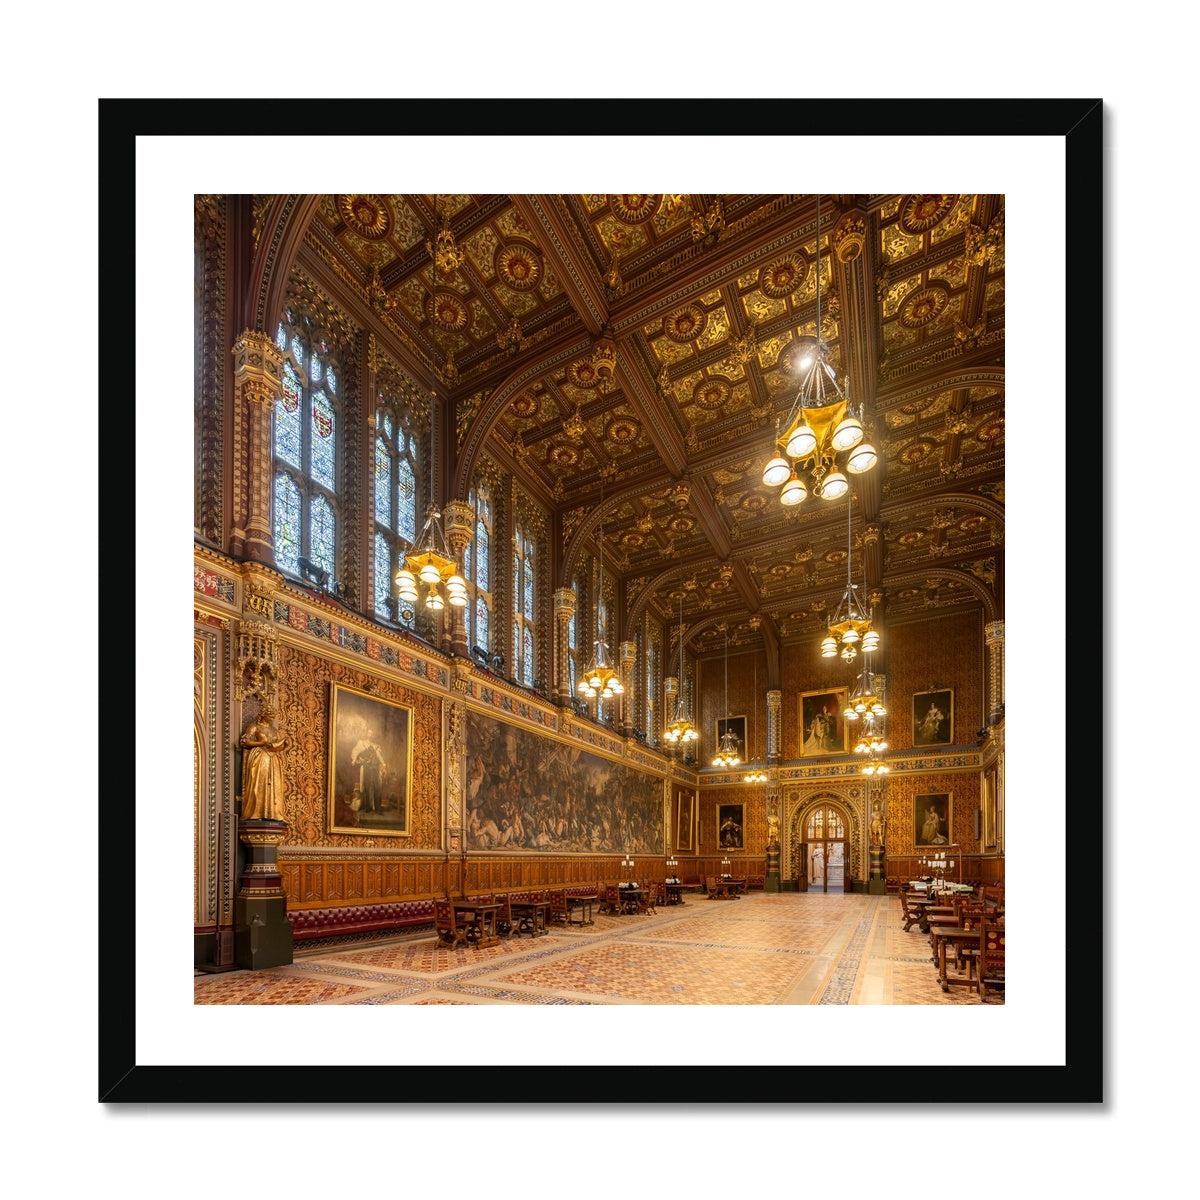 The Royal Gallery Framed Print